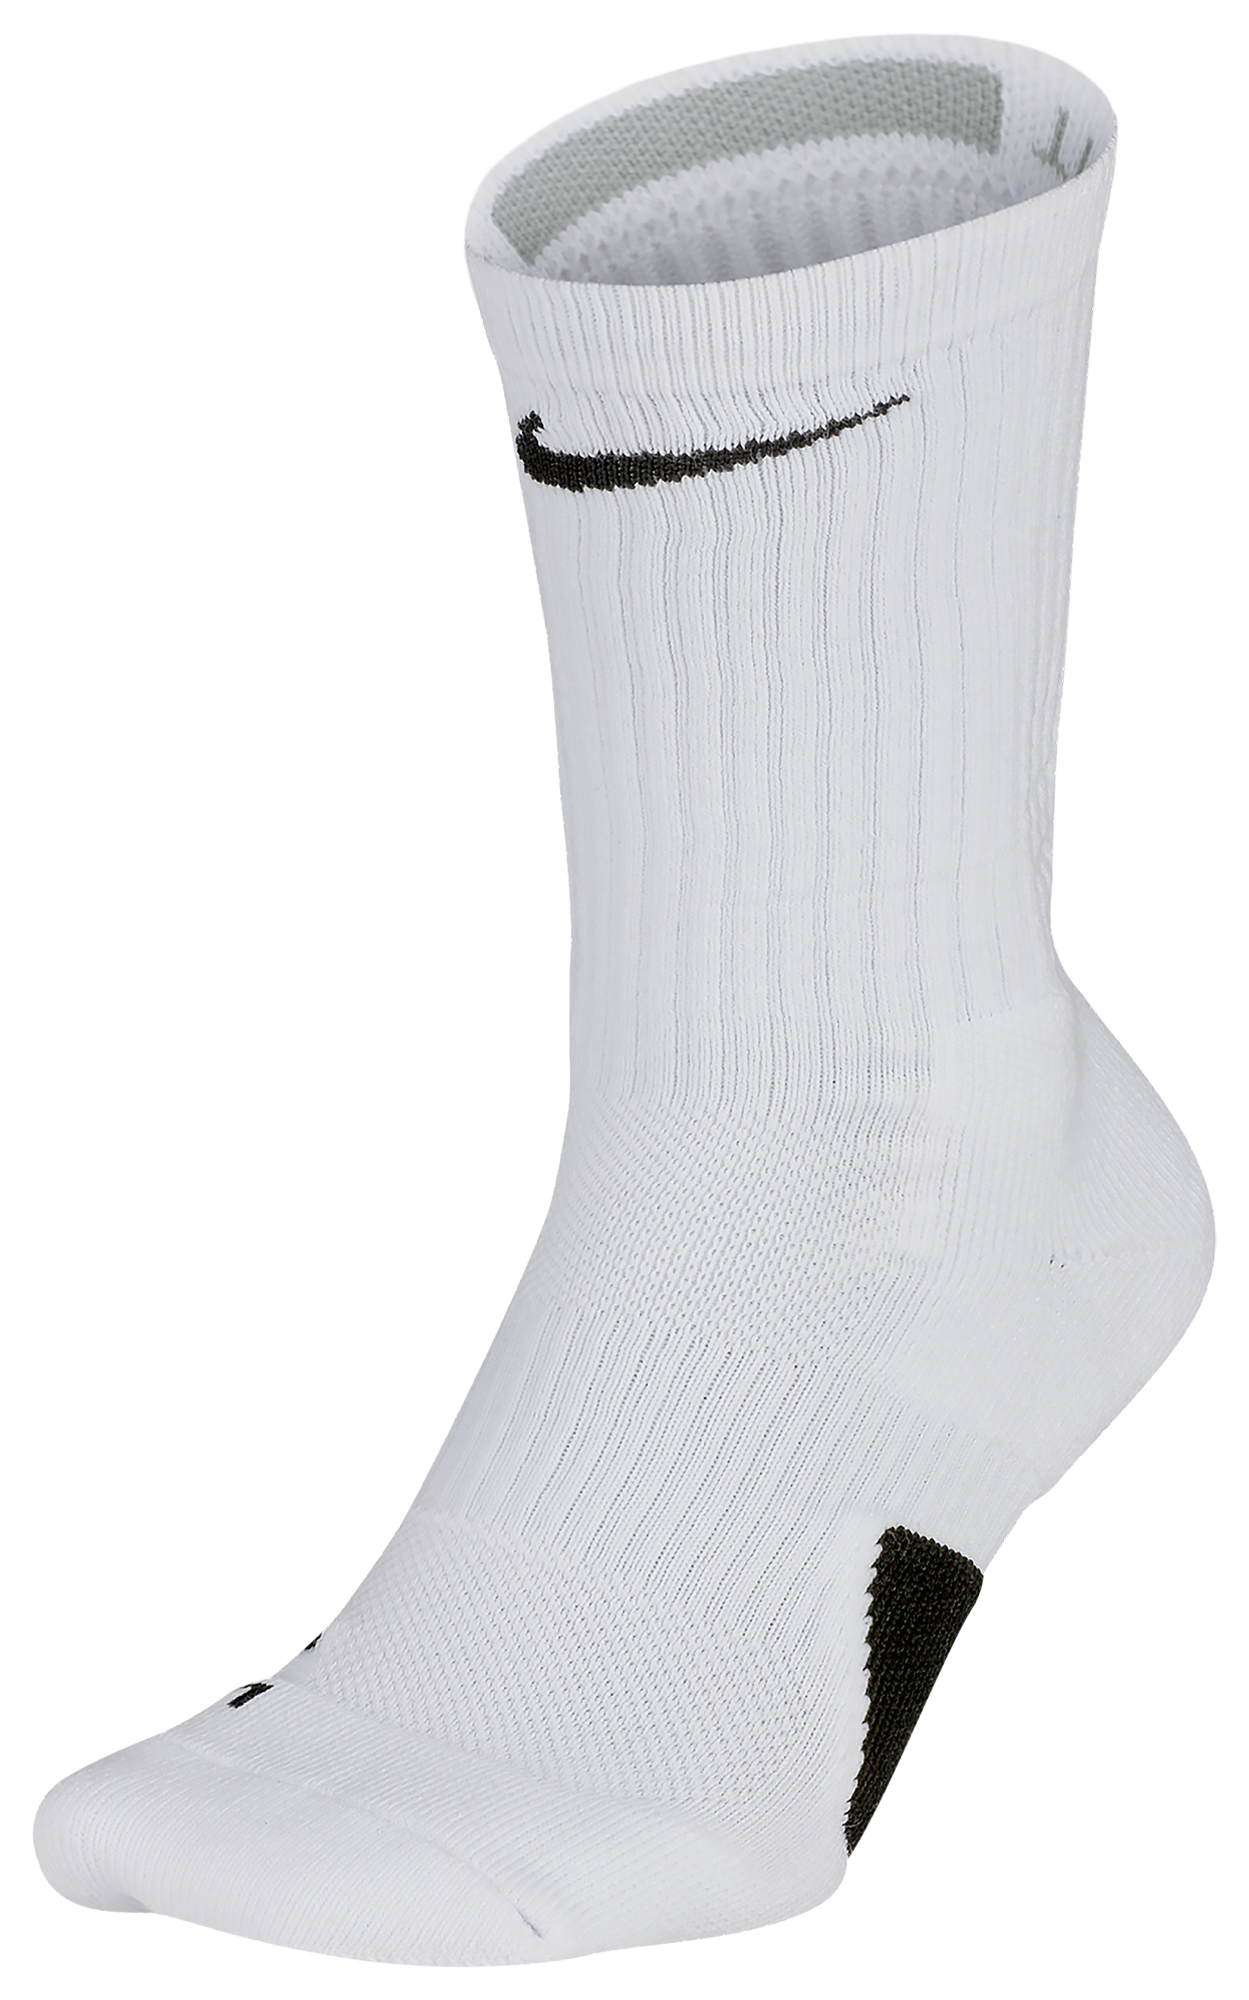 women's nike socks canada